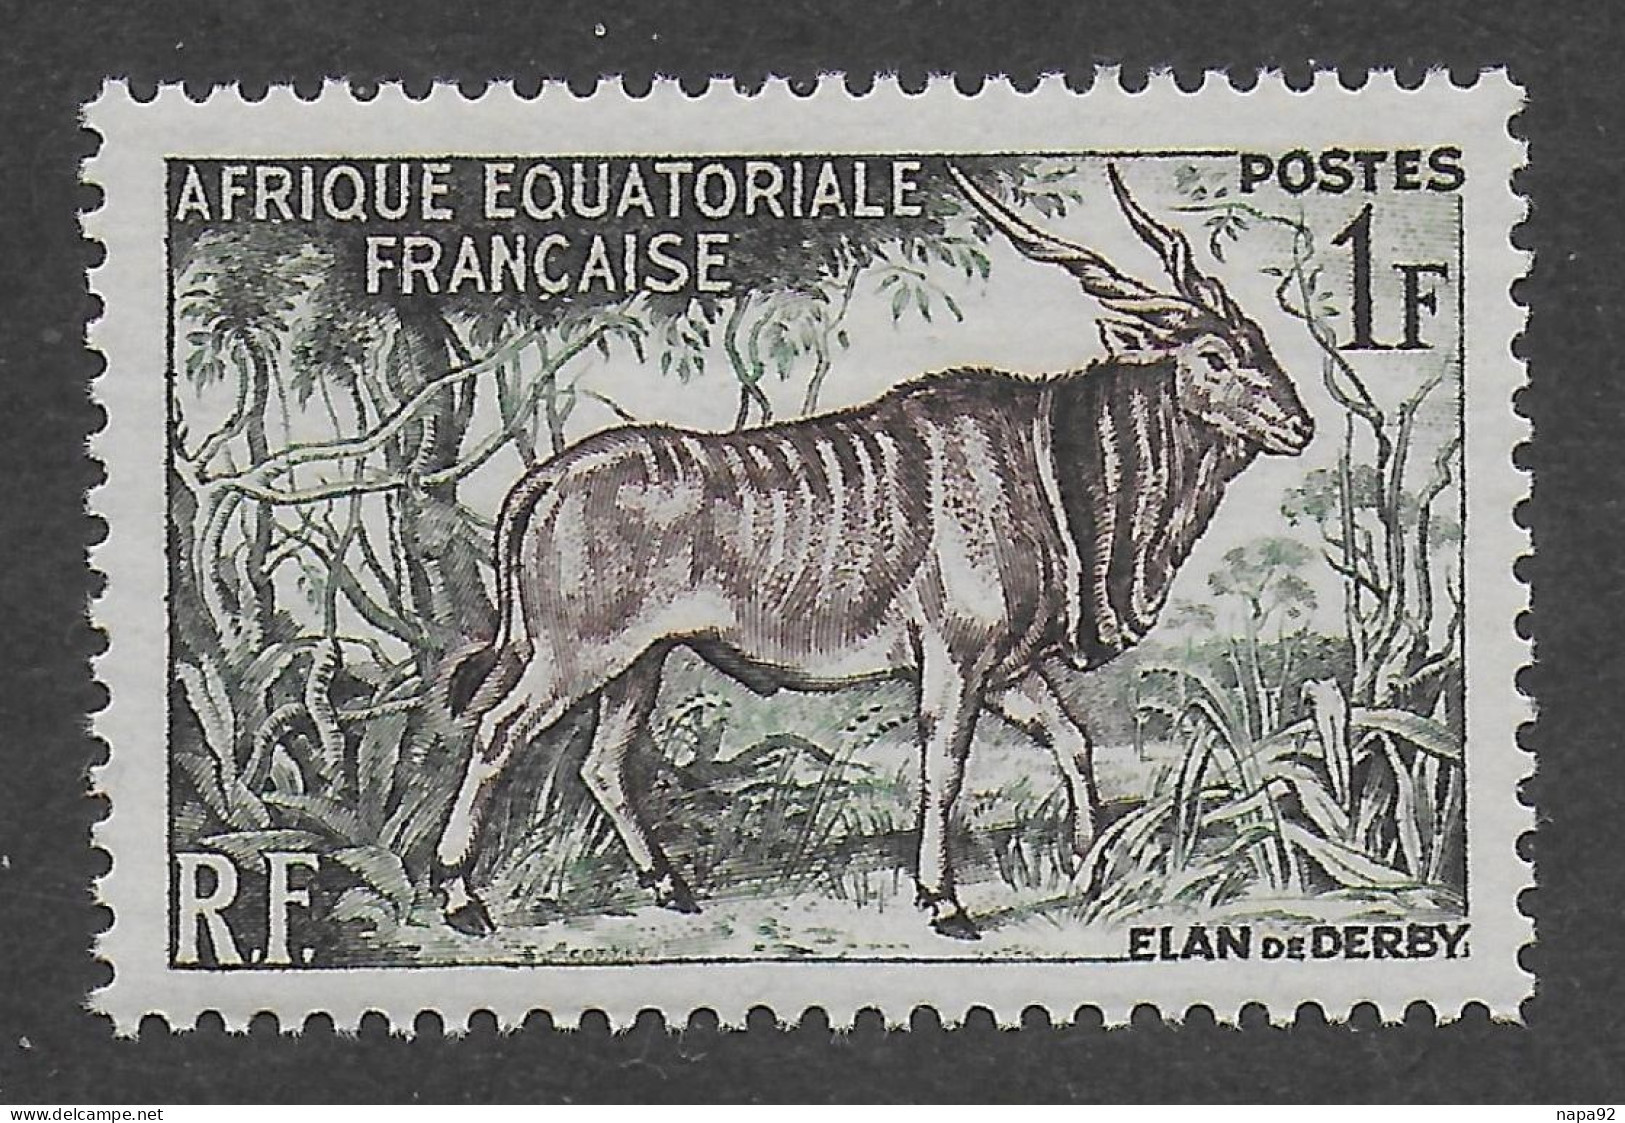 AFRIQUE EQUATORIALE FRANCAISE - AEF - A.E.F. - 1957 - YT 238** - MNH - Ongebruikt